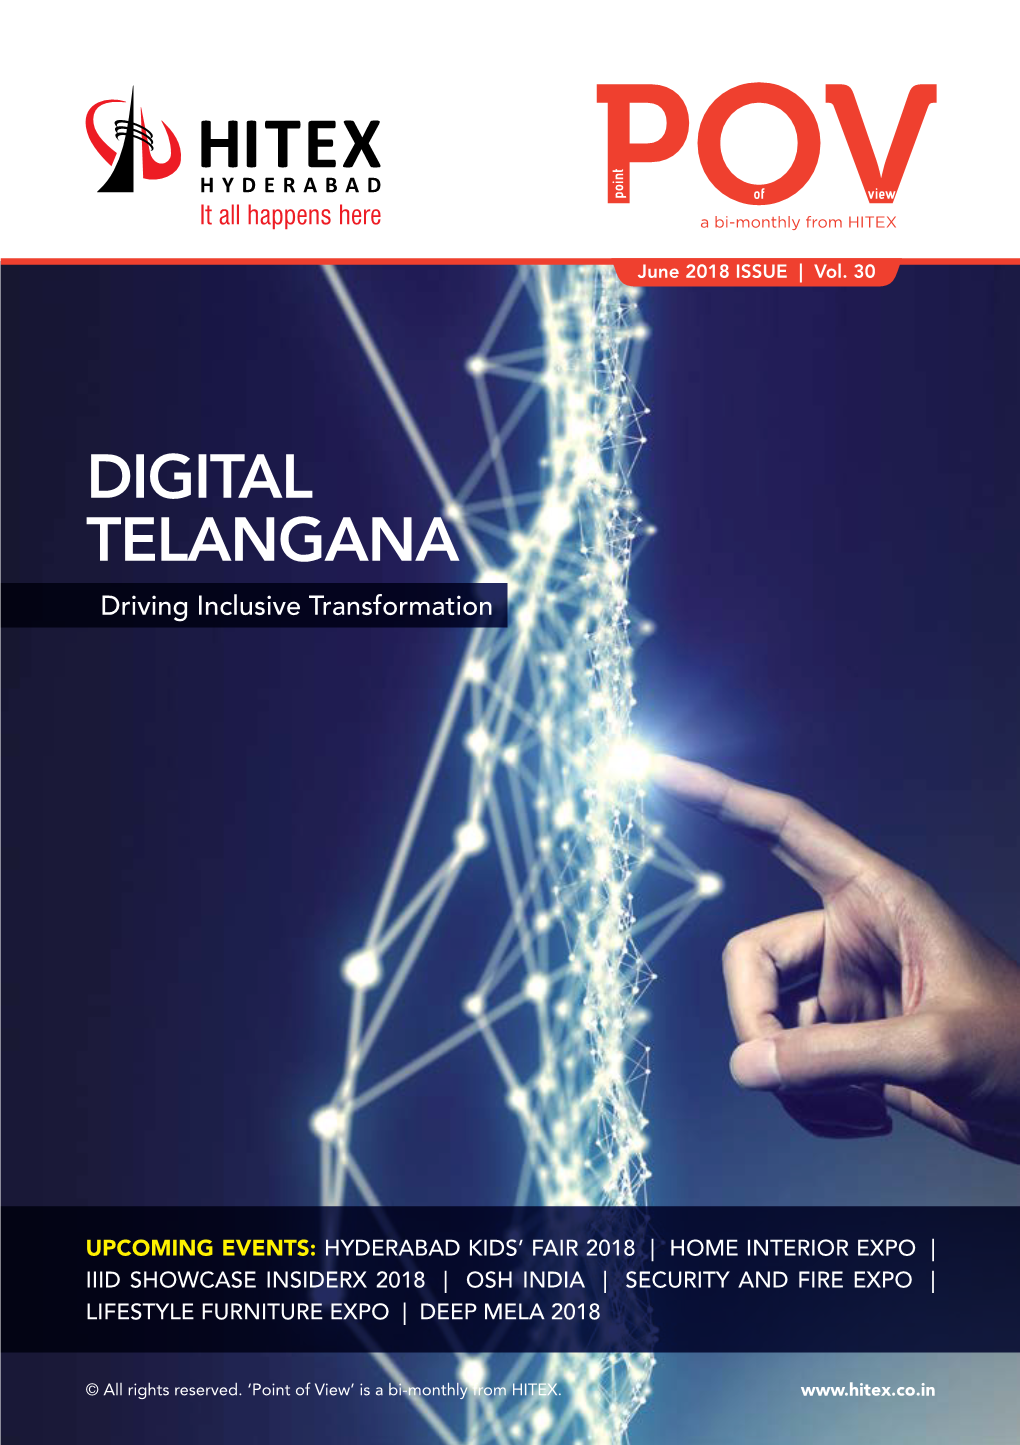 Digital Telangana Driving Inclusive Transformation